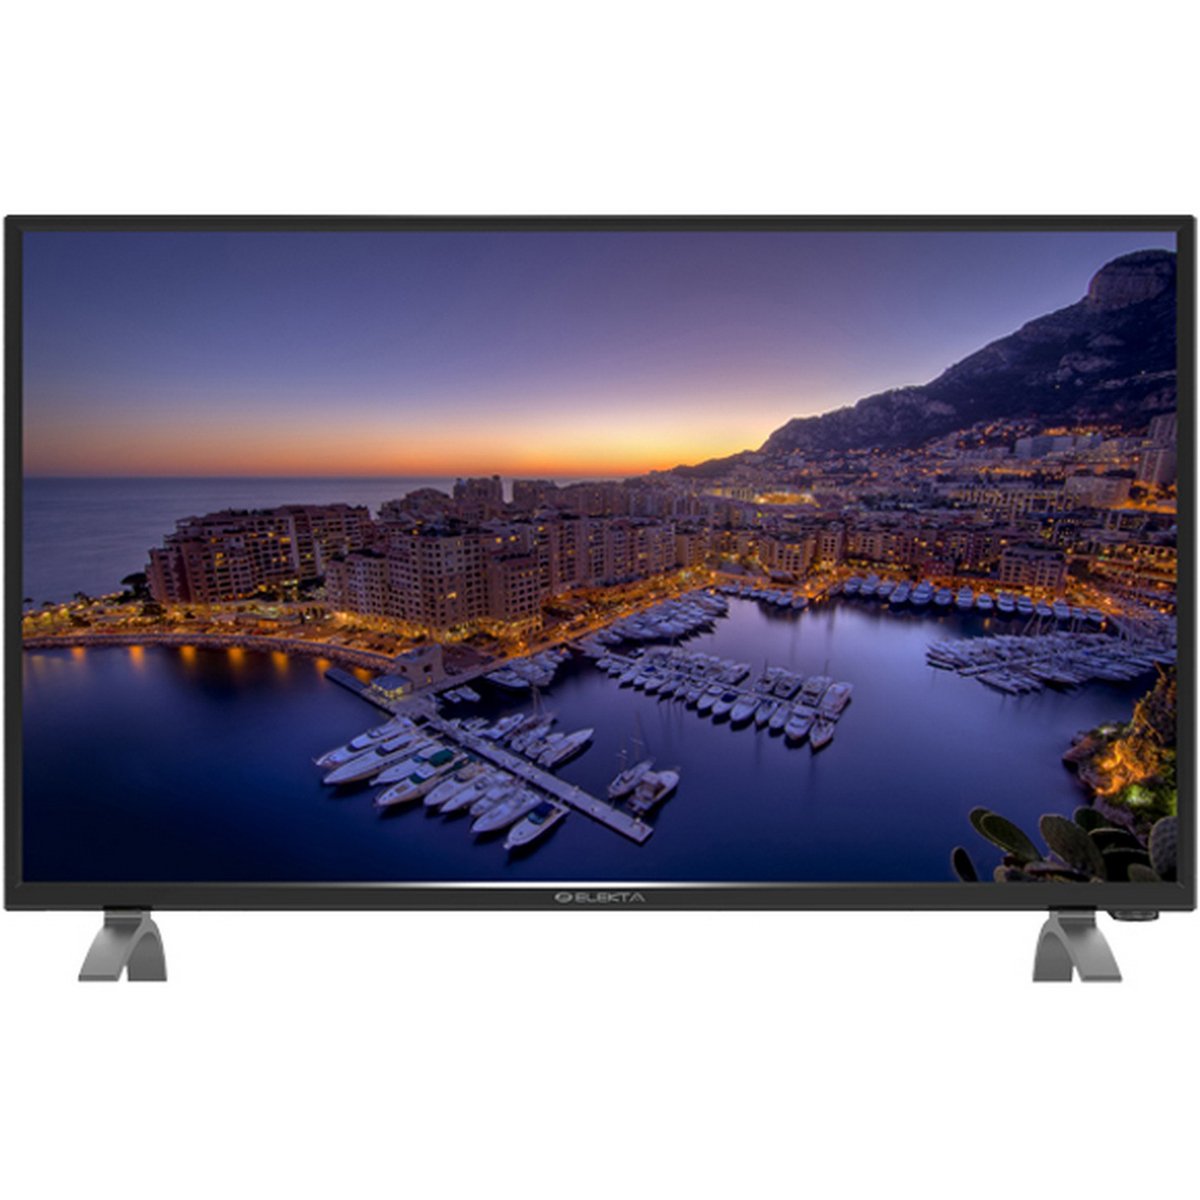 Elekta Ultra HD Smart LED TV ELED50SMART 50inch